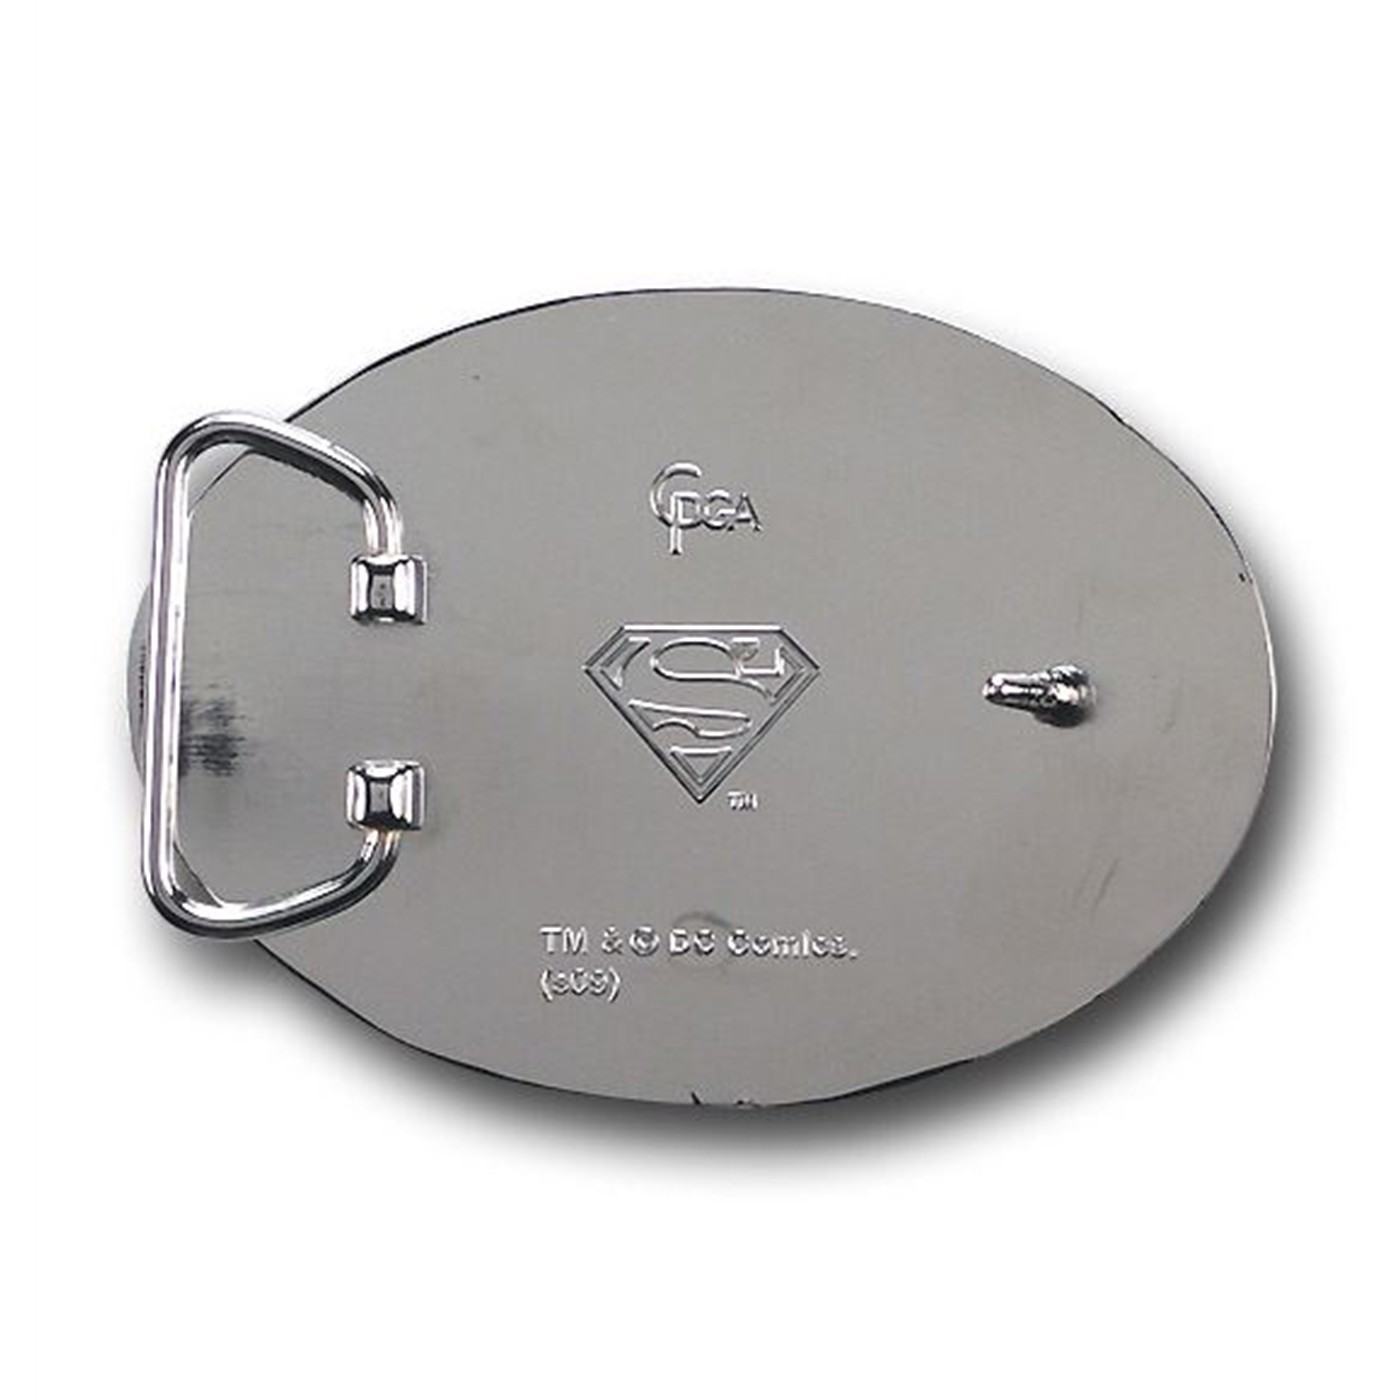 Superman 3D Chrome on Black Oval Belt Buckle